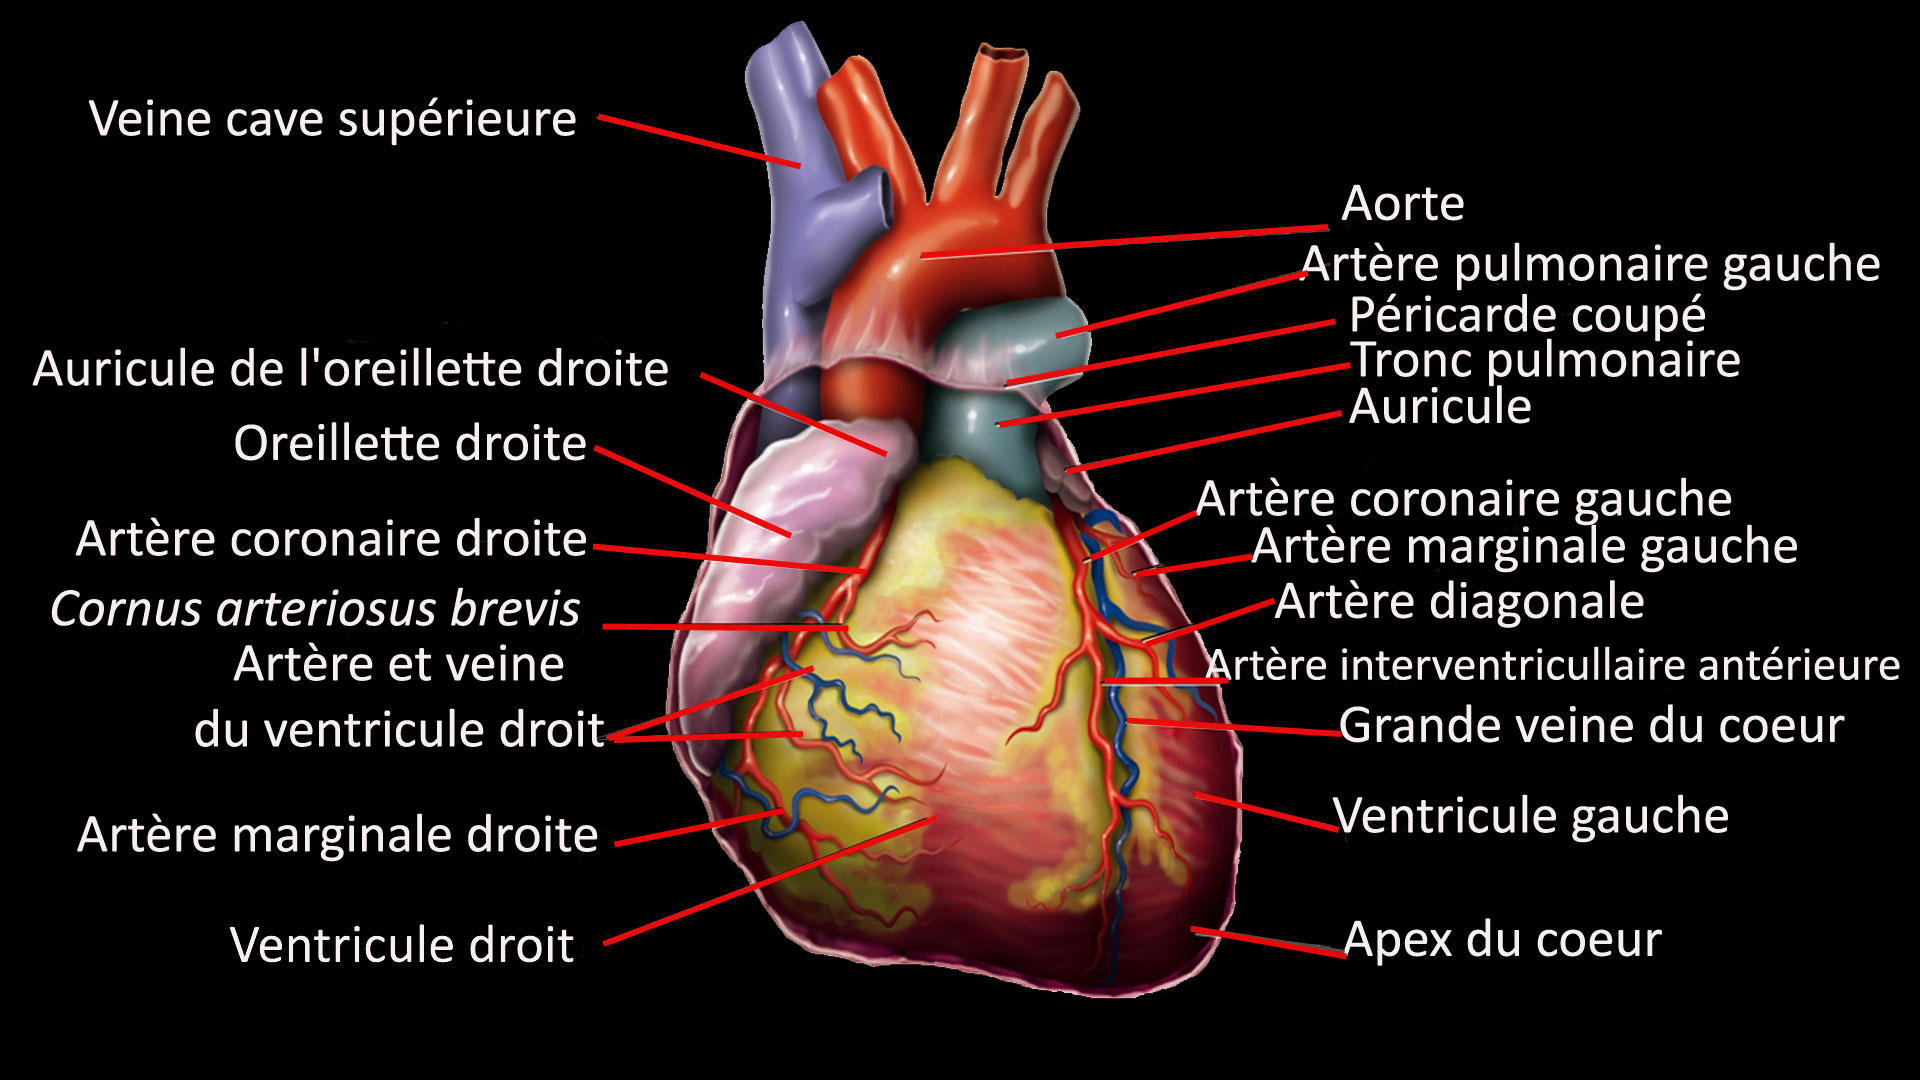 Anatomie du cœur humain